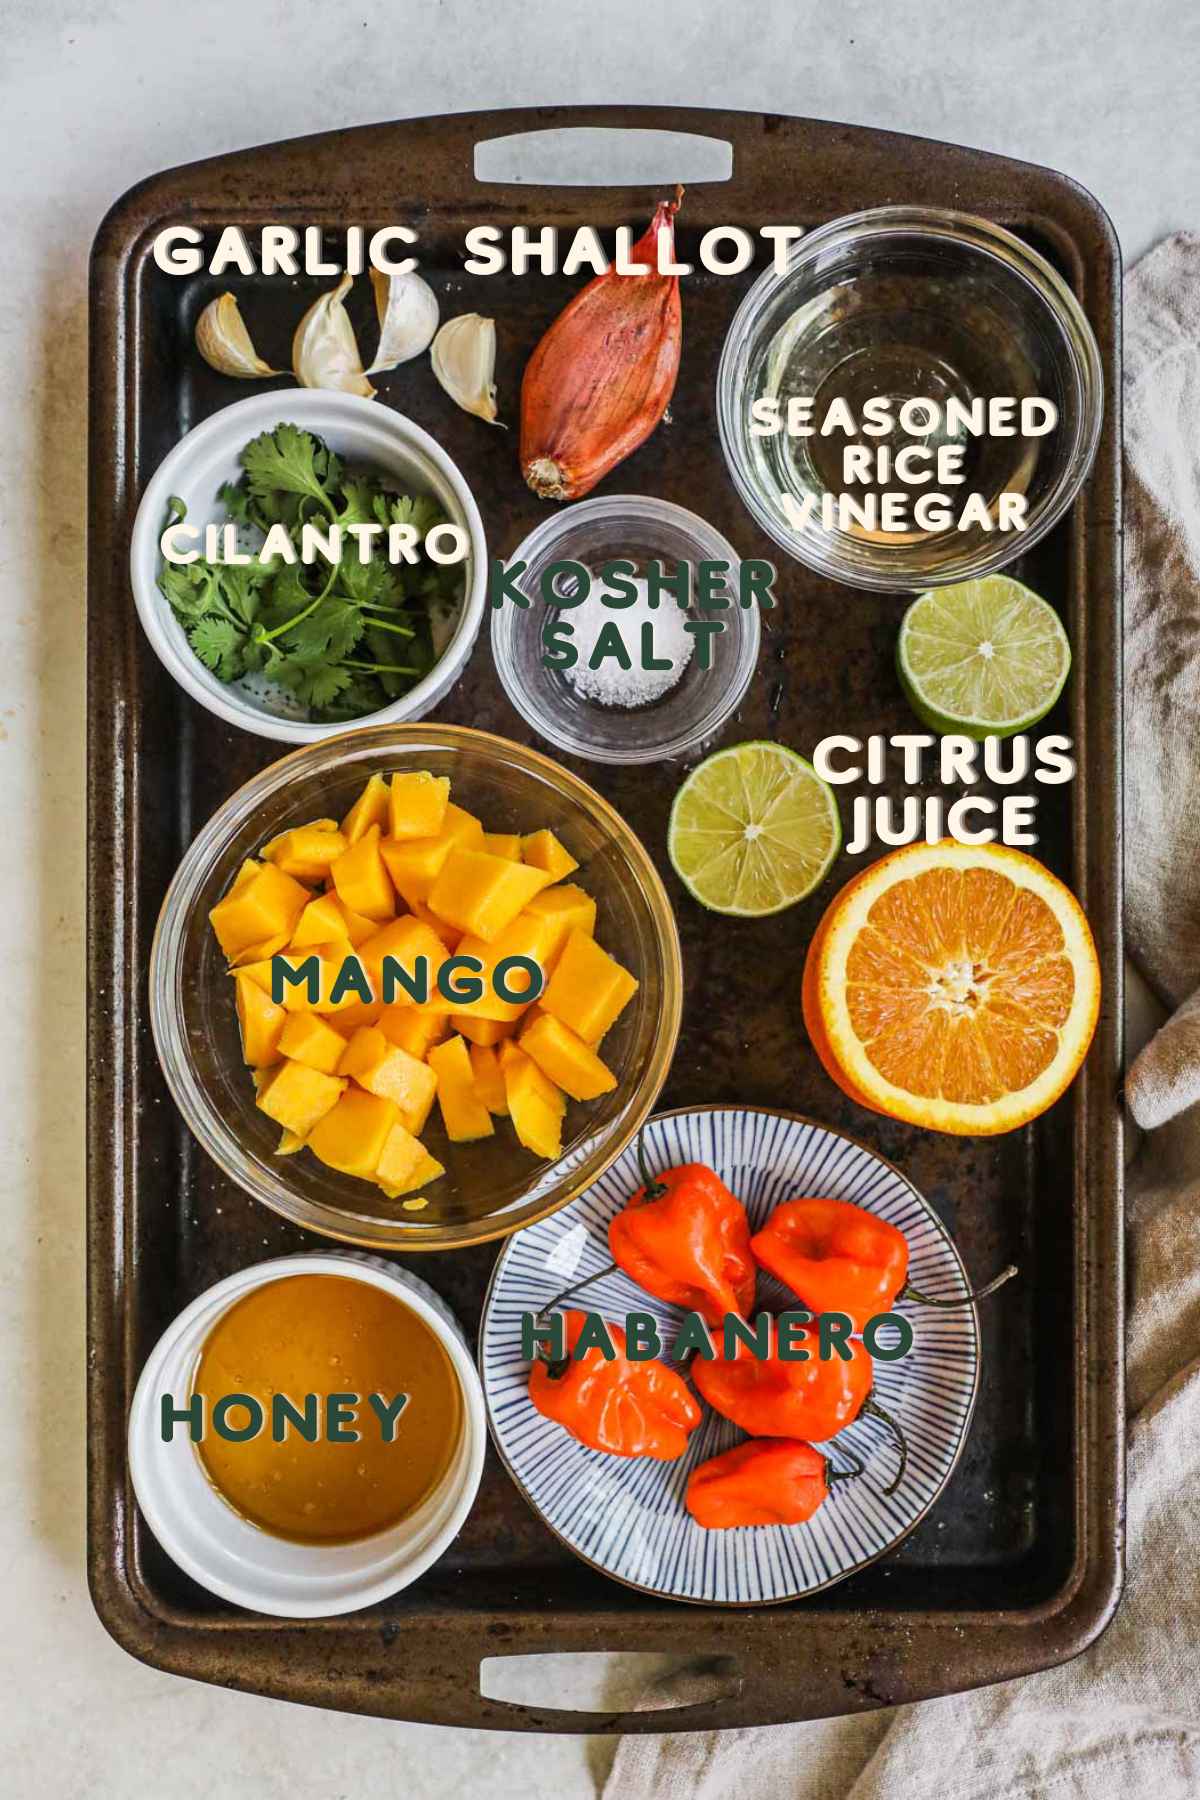 Ingredients to make mango habanero pepper sauce, including garlic, shallot, seasoned rice vinegar, kosher salt, citrus juice, honey, mango pulp, and habanero peppers.